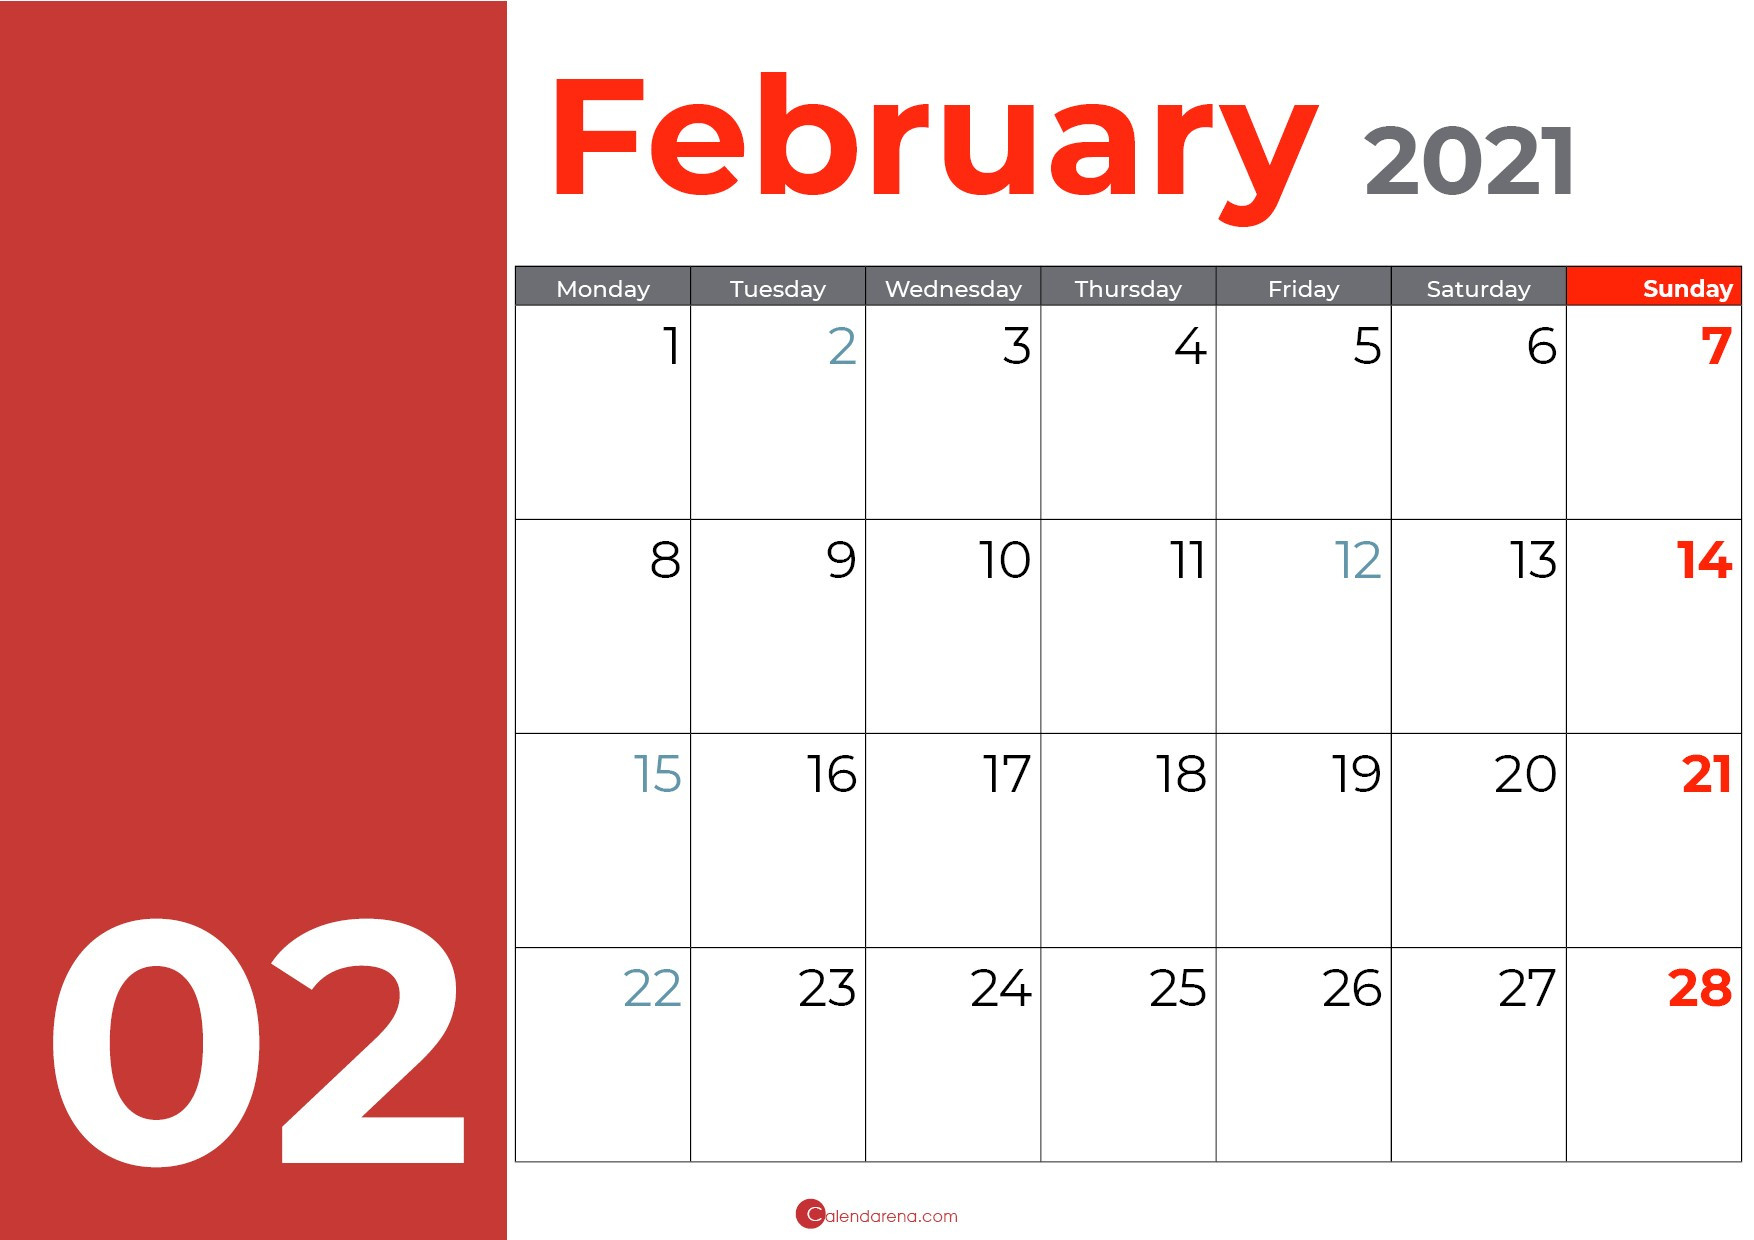 Best Free 🇺🇸 Blank February Calendar 2021 - Calendarena-February Calendar 2021